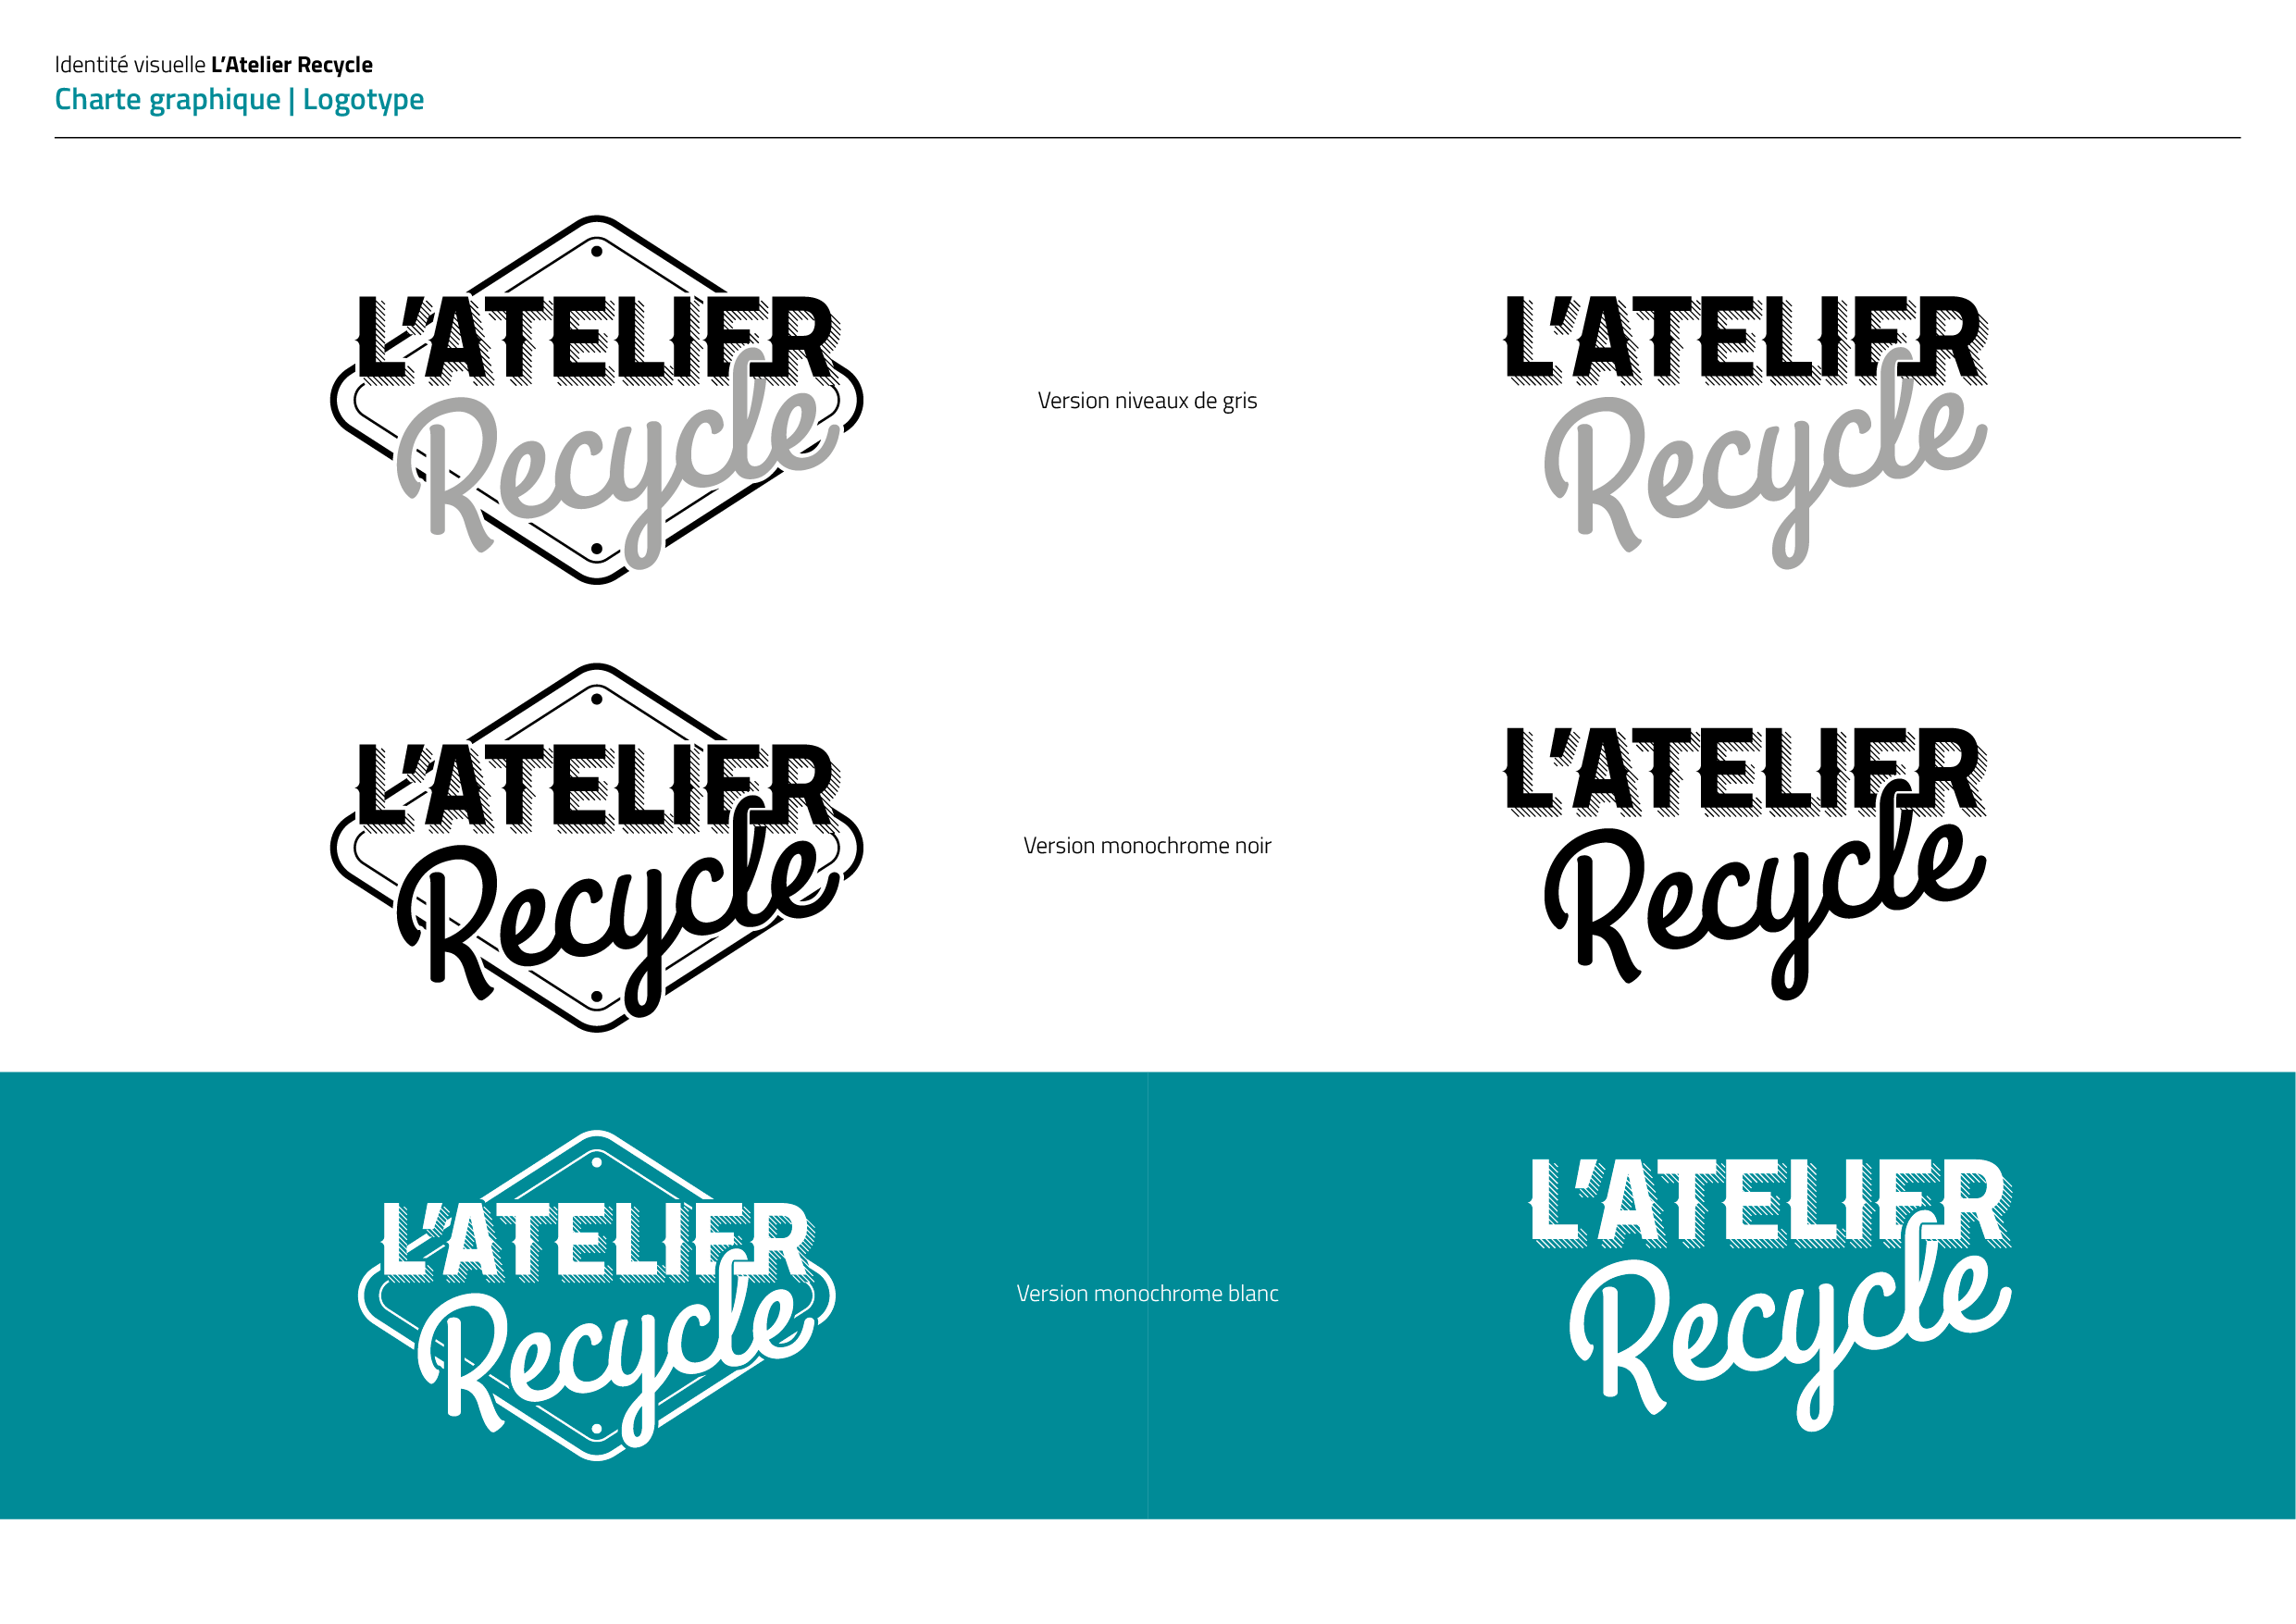 logos_L'Atelier Recycle_CHARTE_Charte-02